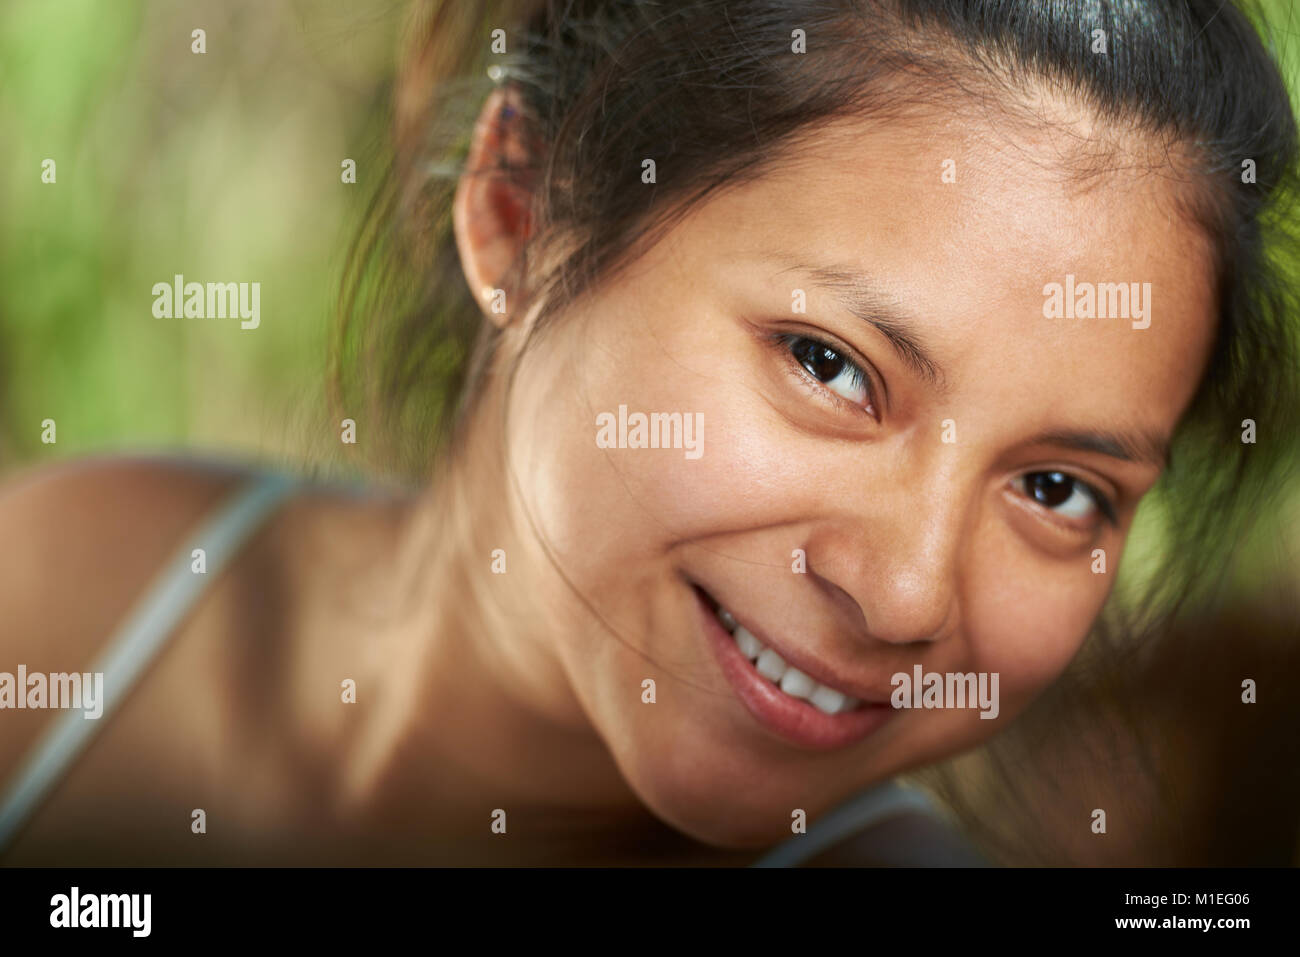 Headshot of smiling latino girl with natural makeup Stock Photo